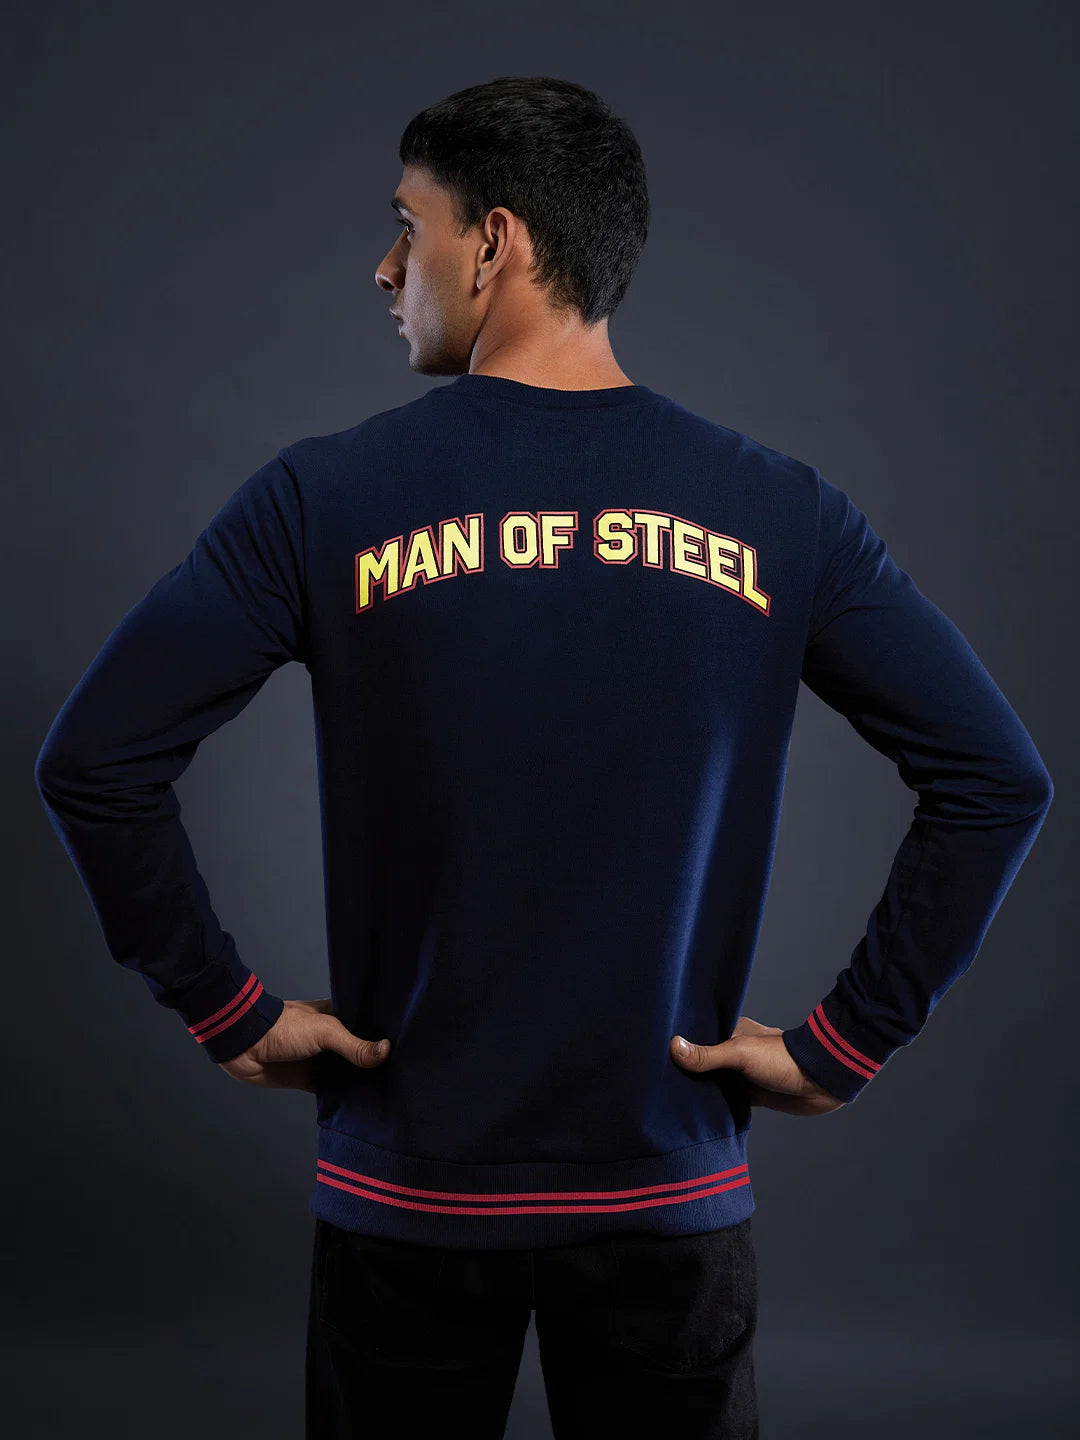 Superman Man of Steel (UK version)